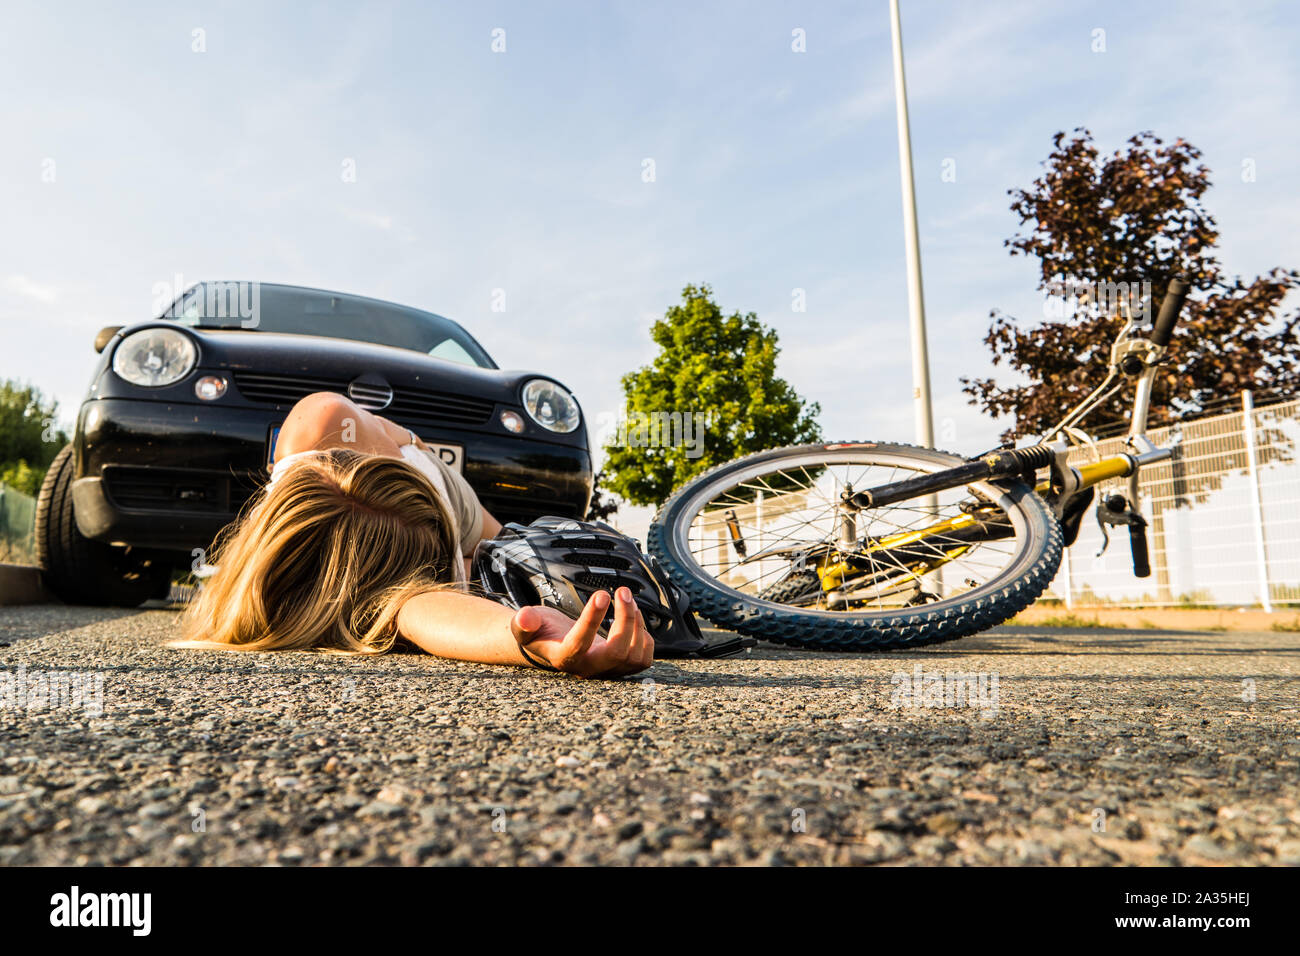 Woman fall bike accident Stock Photo